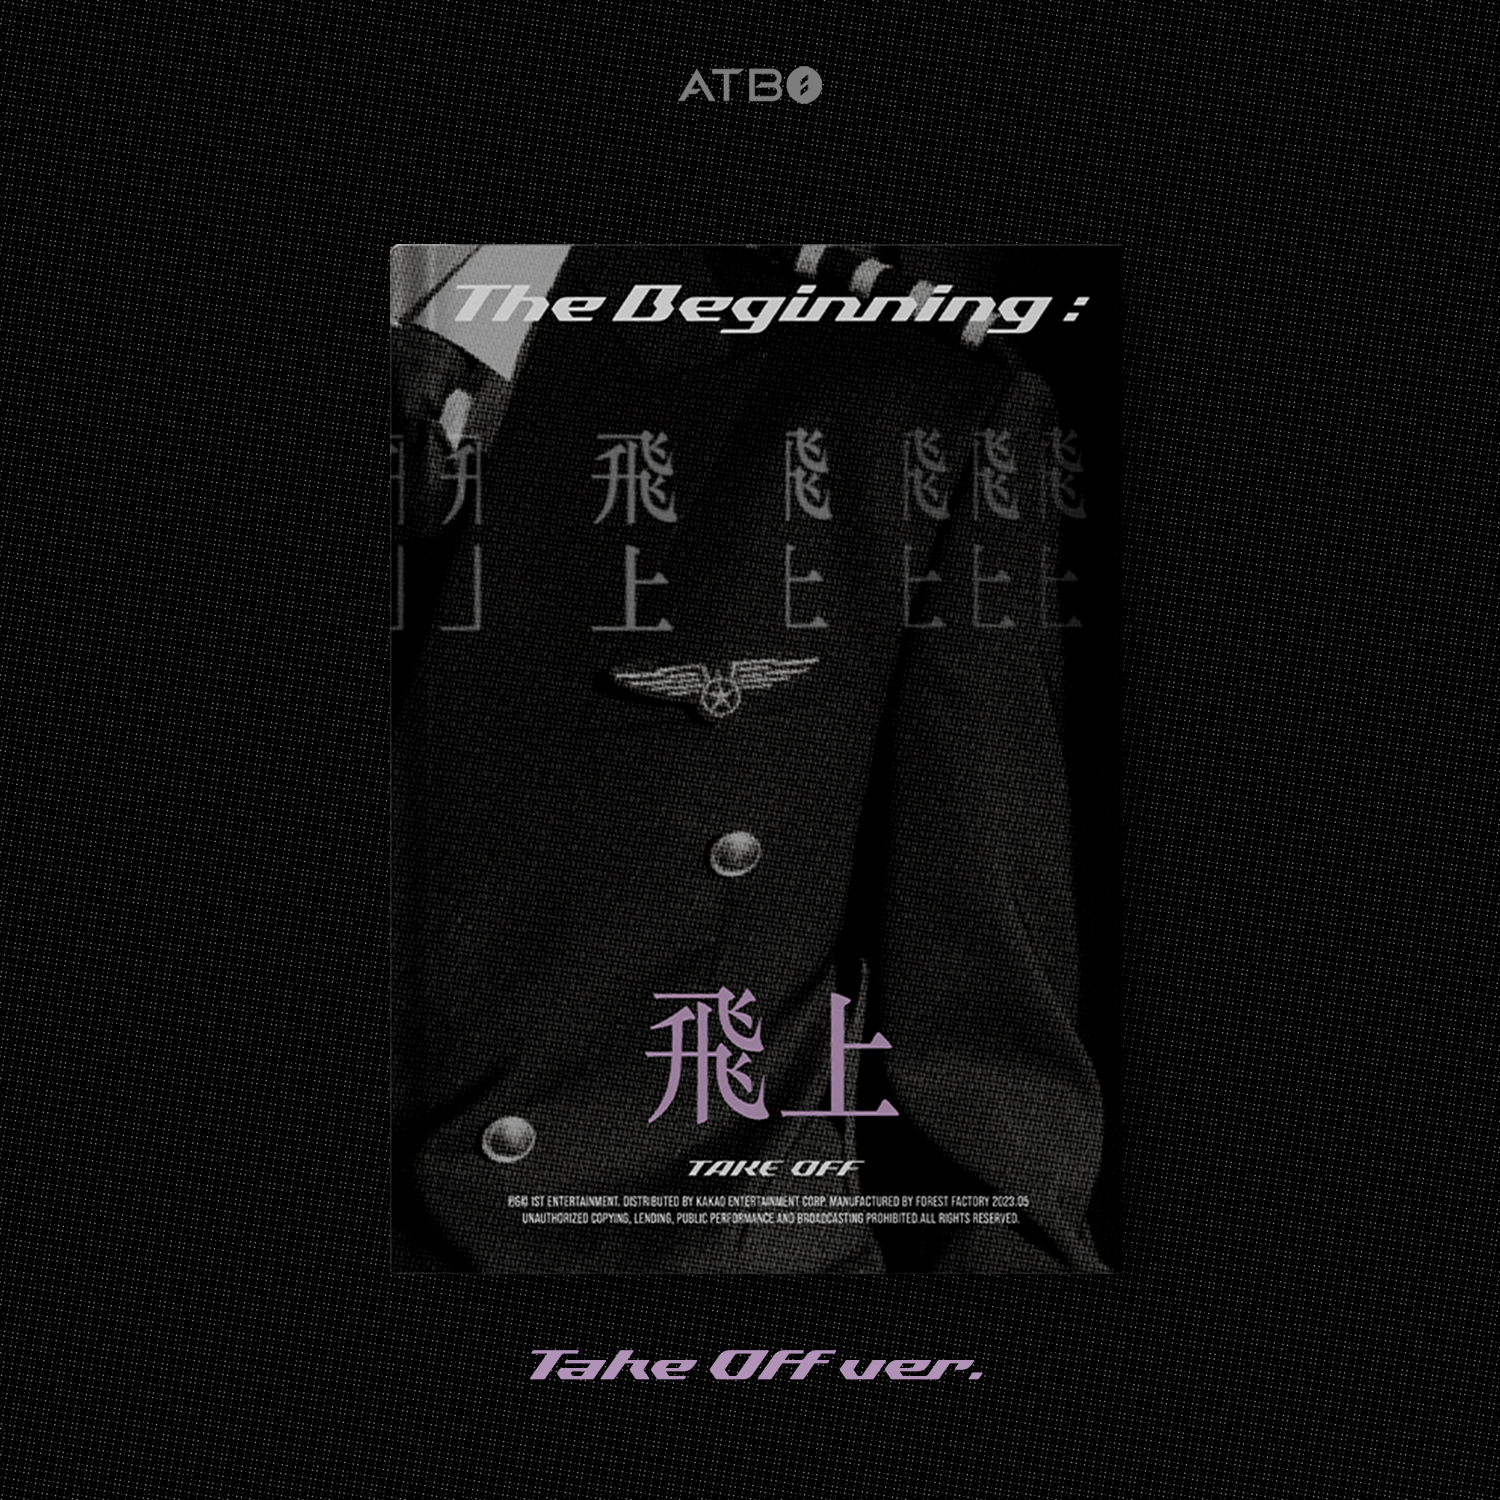 ATBO - ミニアルバム3集 [The Beginning : 飛上] (Take Off Ver.)